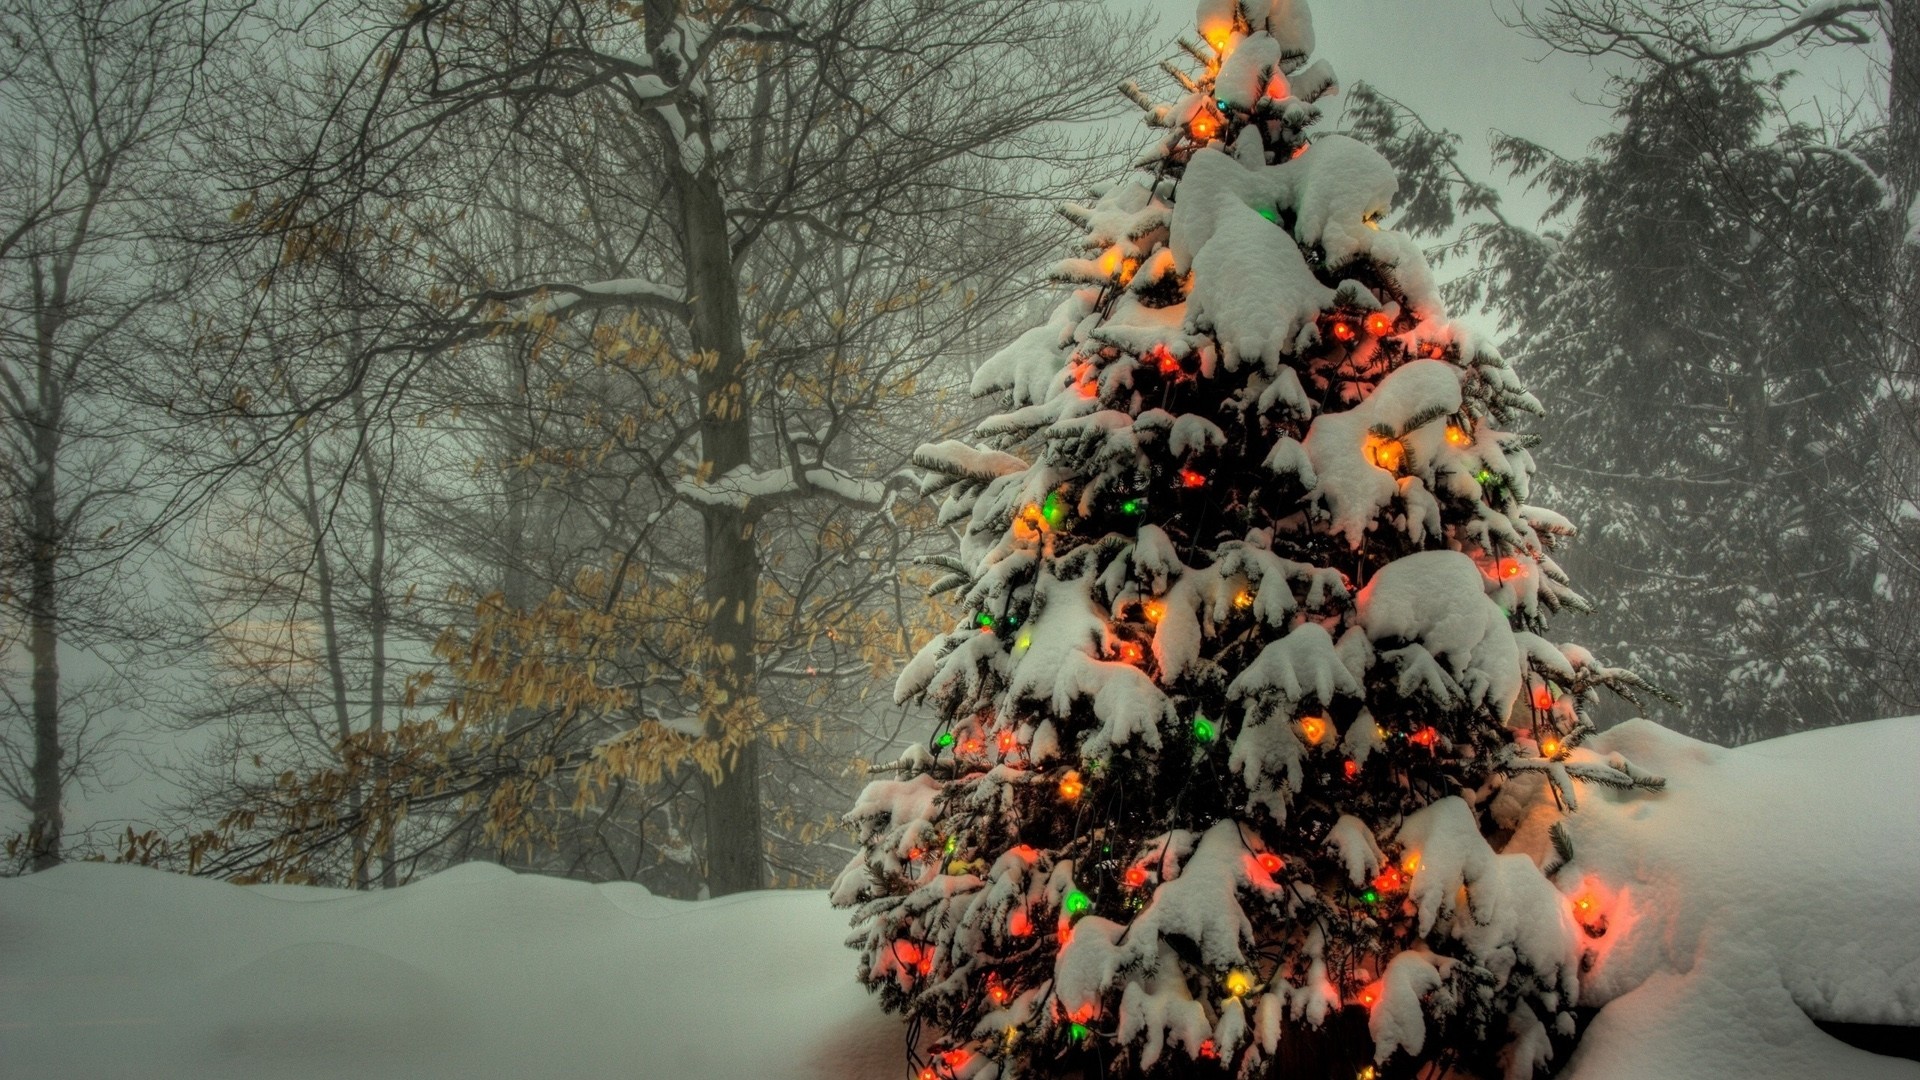 1920x1080 ... Background Full HD 1080p.  Wallpaper christmas tree, toys,  light, snow